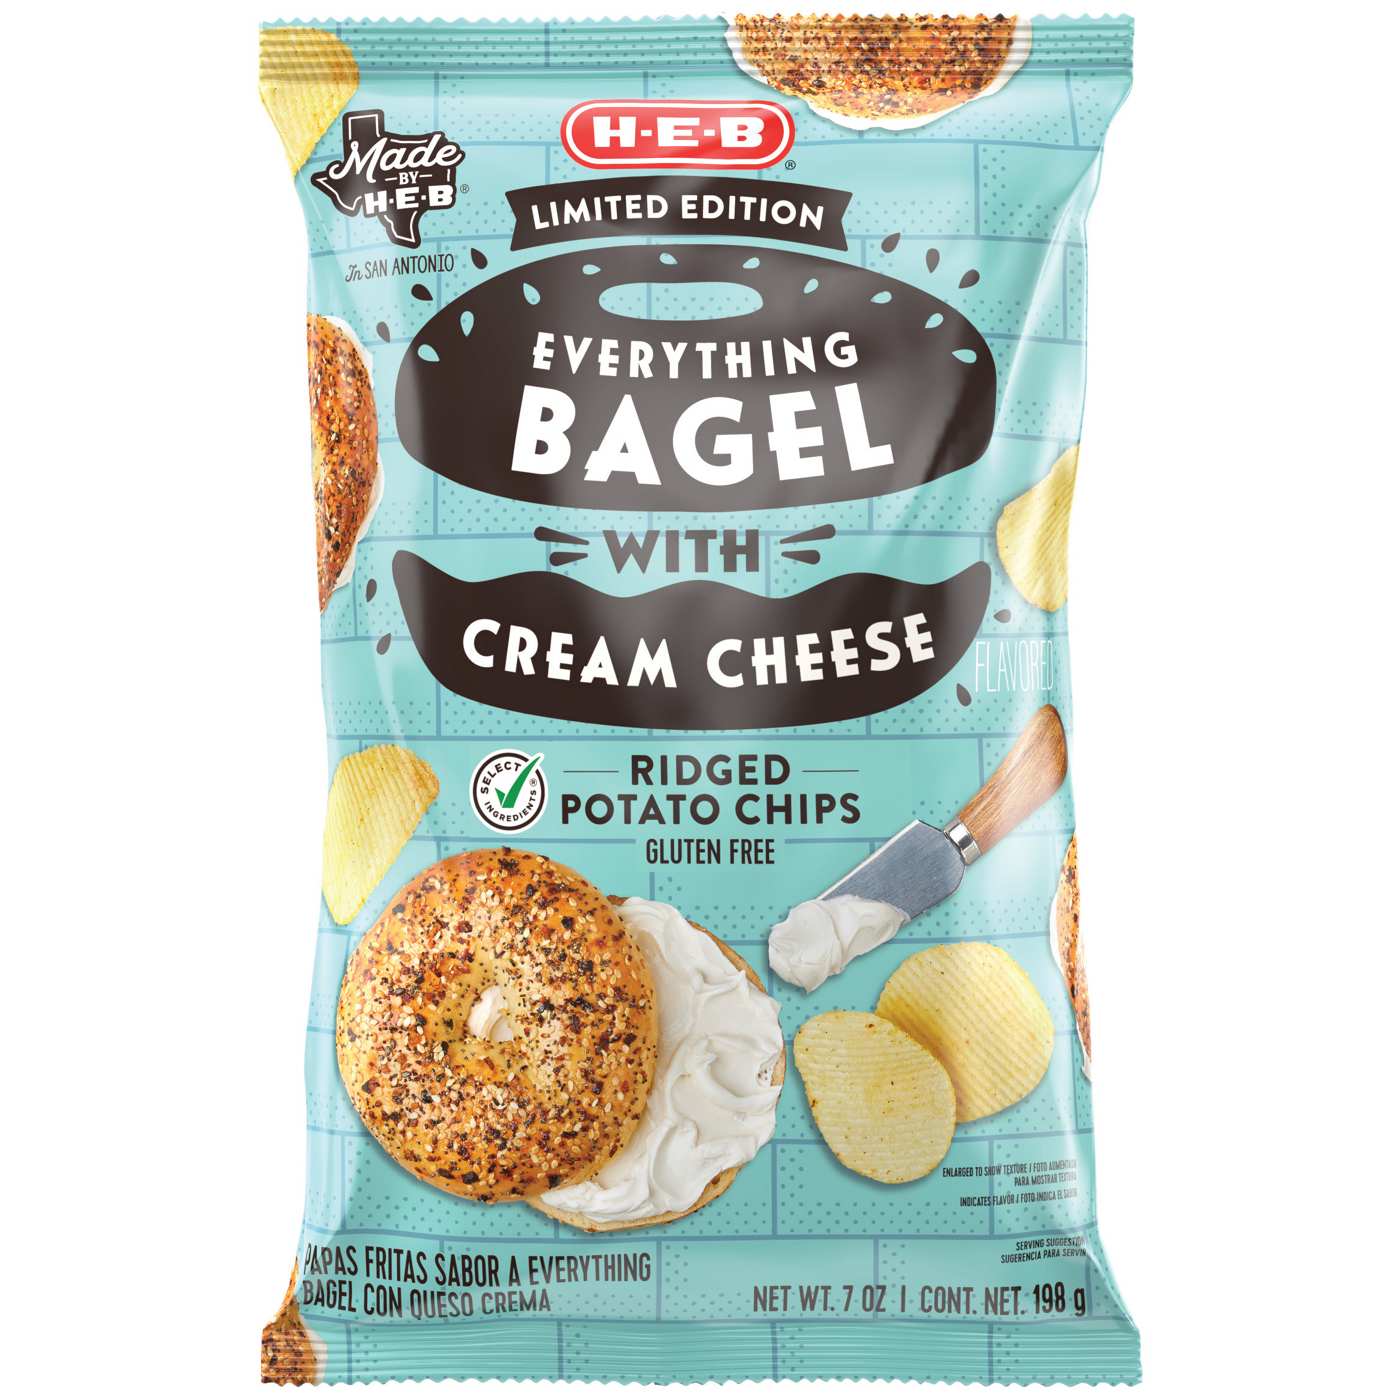 H-E-B Ridged Potato Chips - Everything Bagel Cream Cheese; image 1 of 2